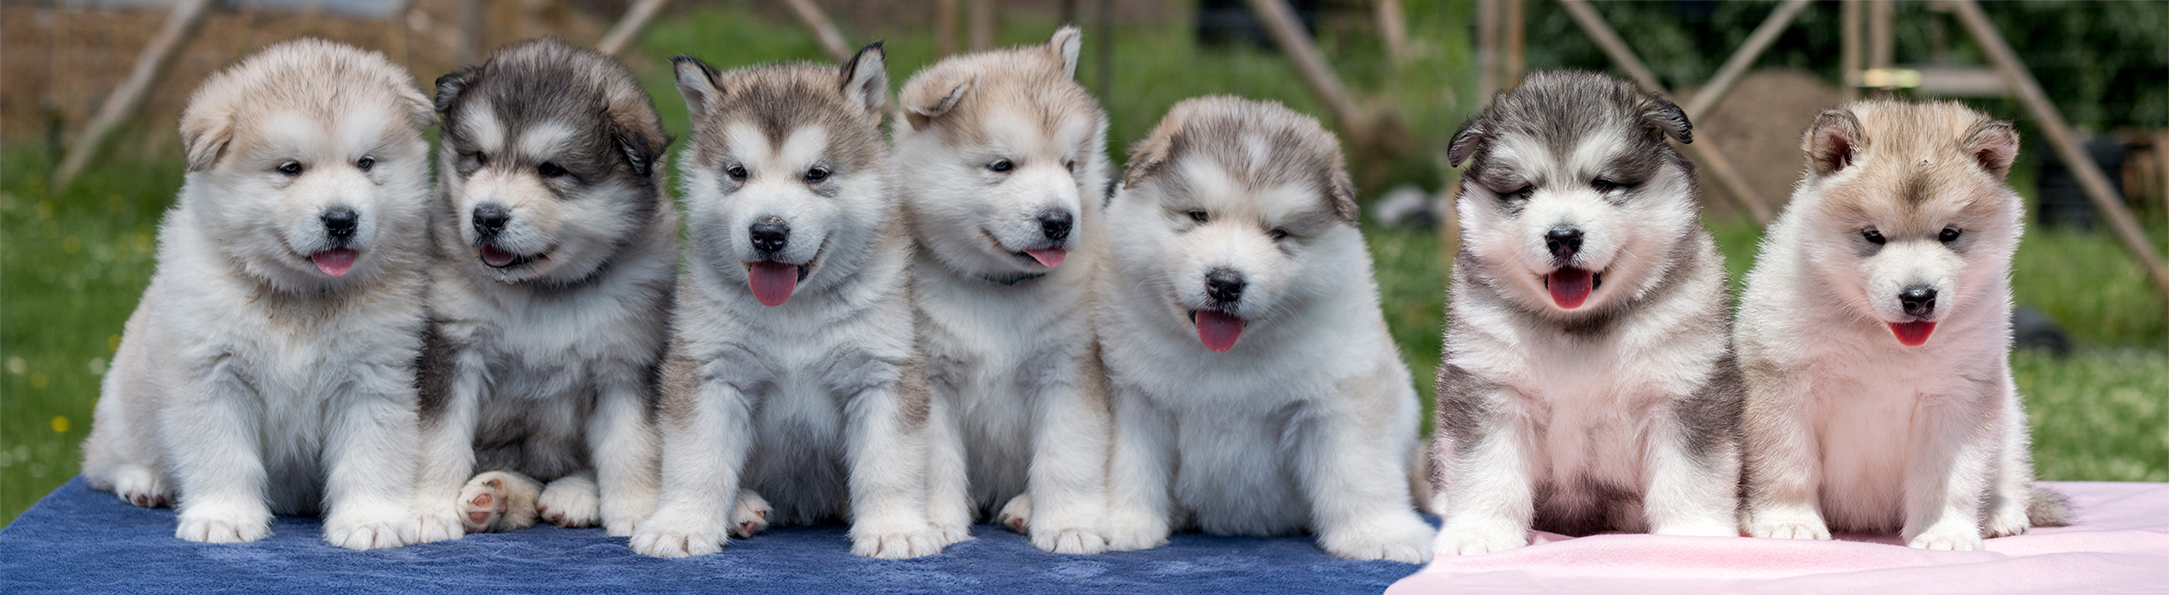 Inua's Voice Alaskan Malamute Litter Puppies 2020